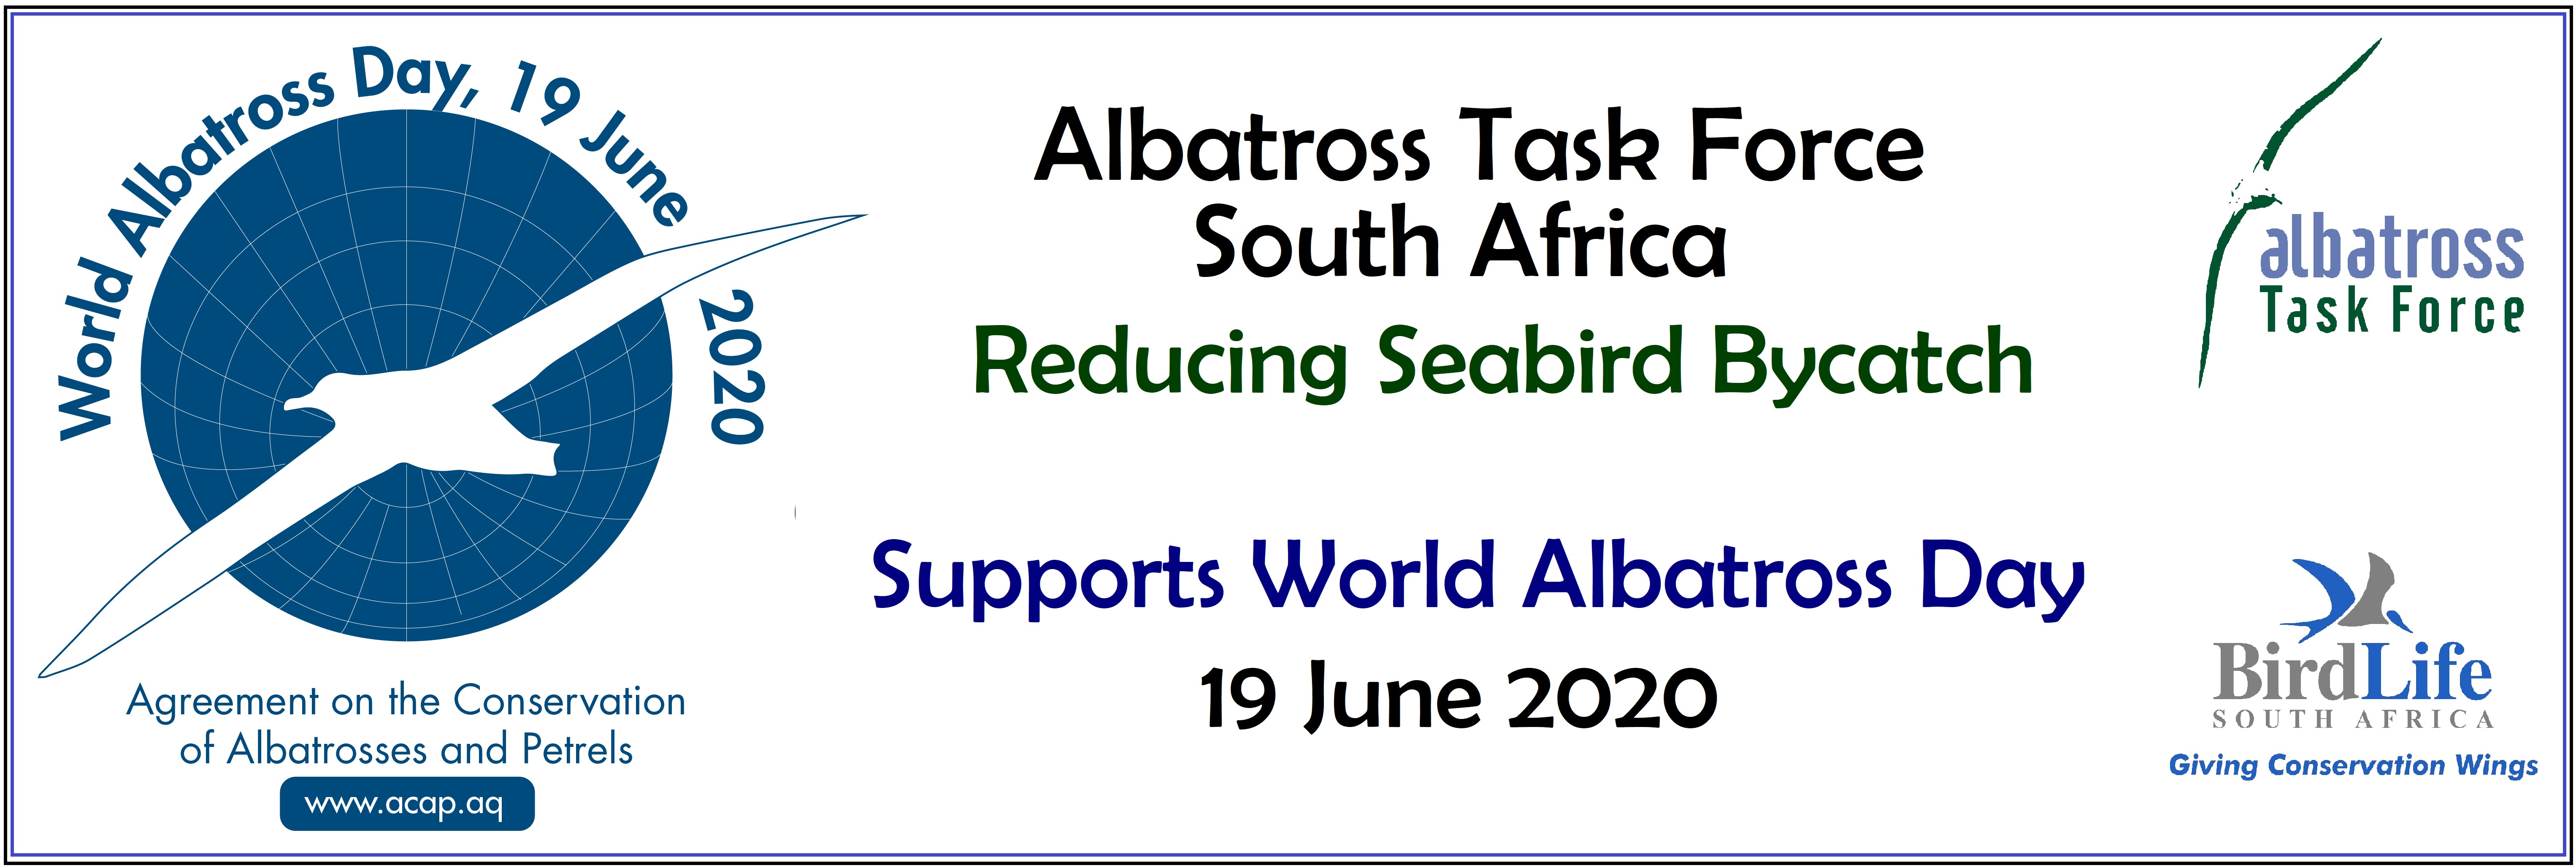 World Albatross Day SA ATF banner Jan 2020